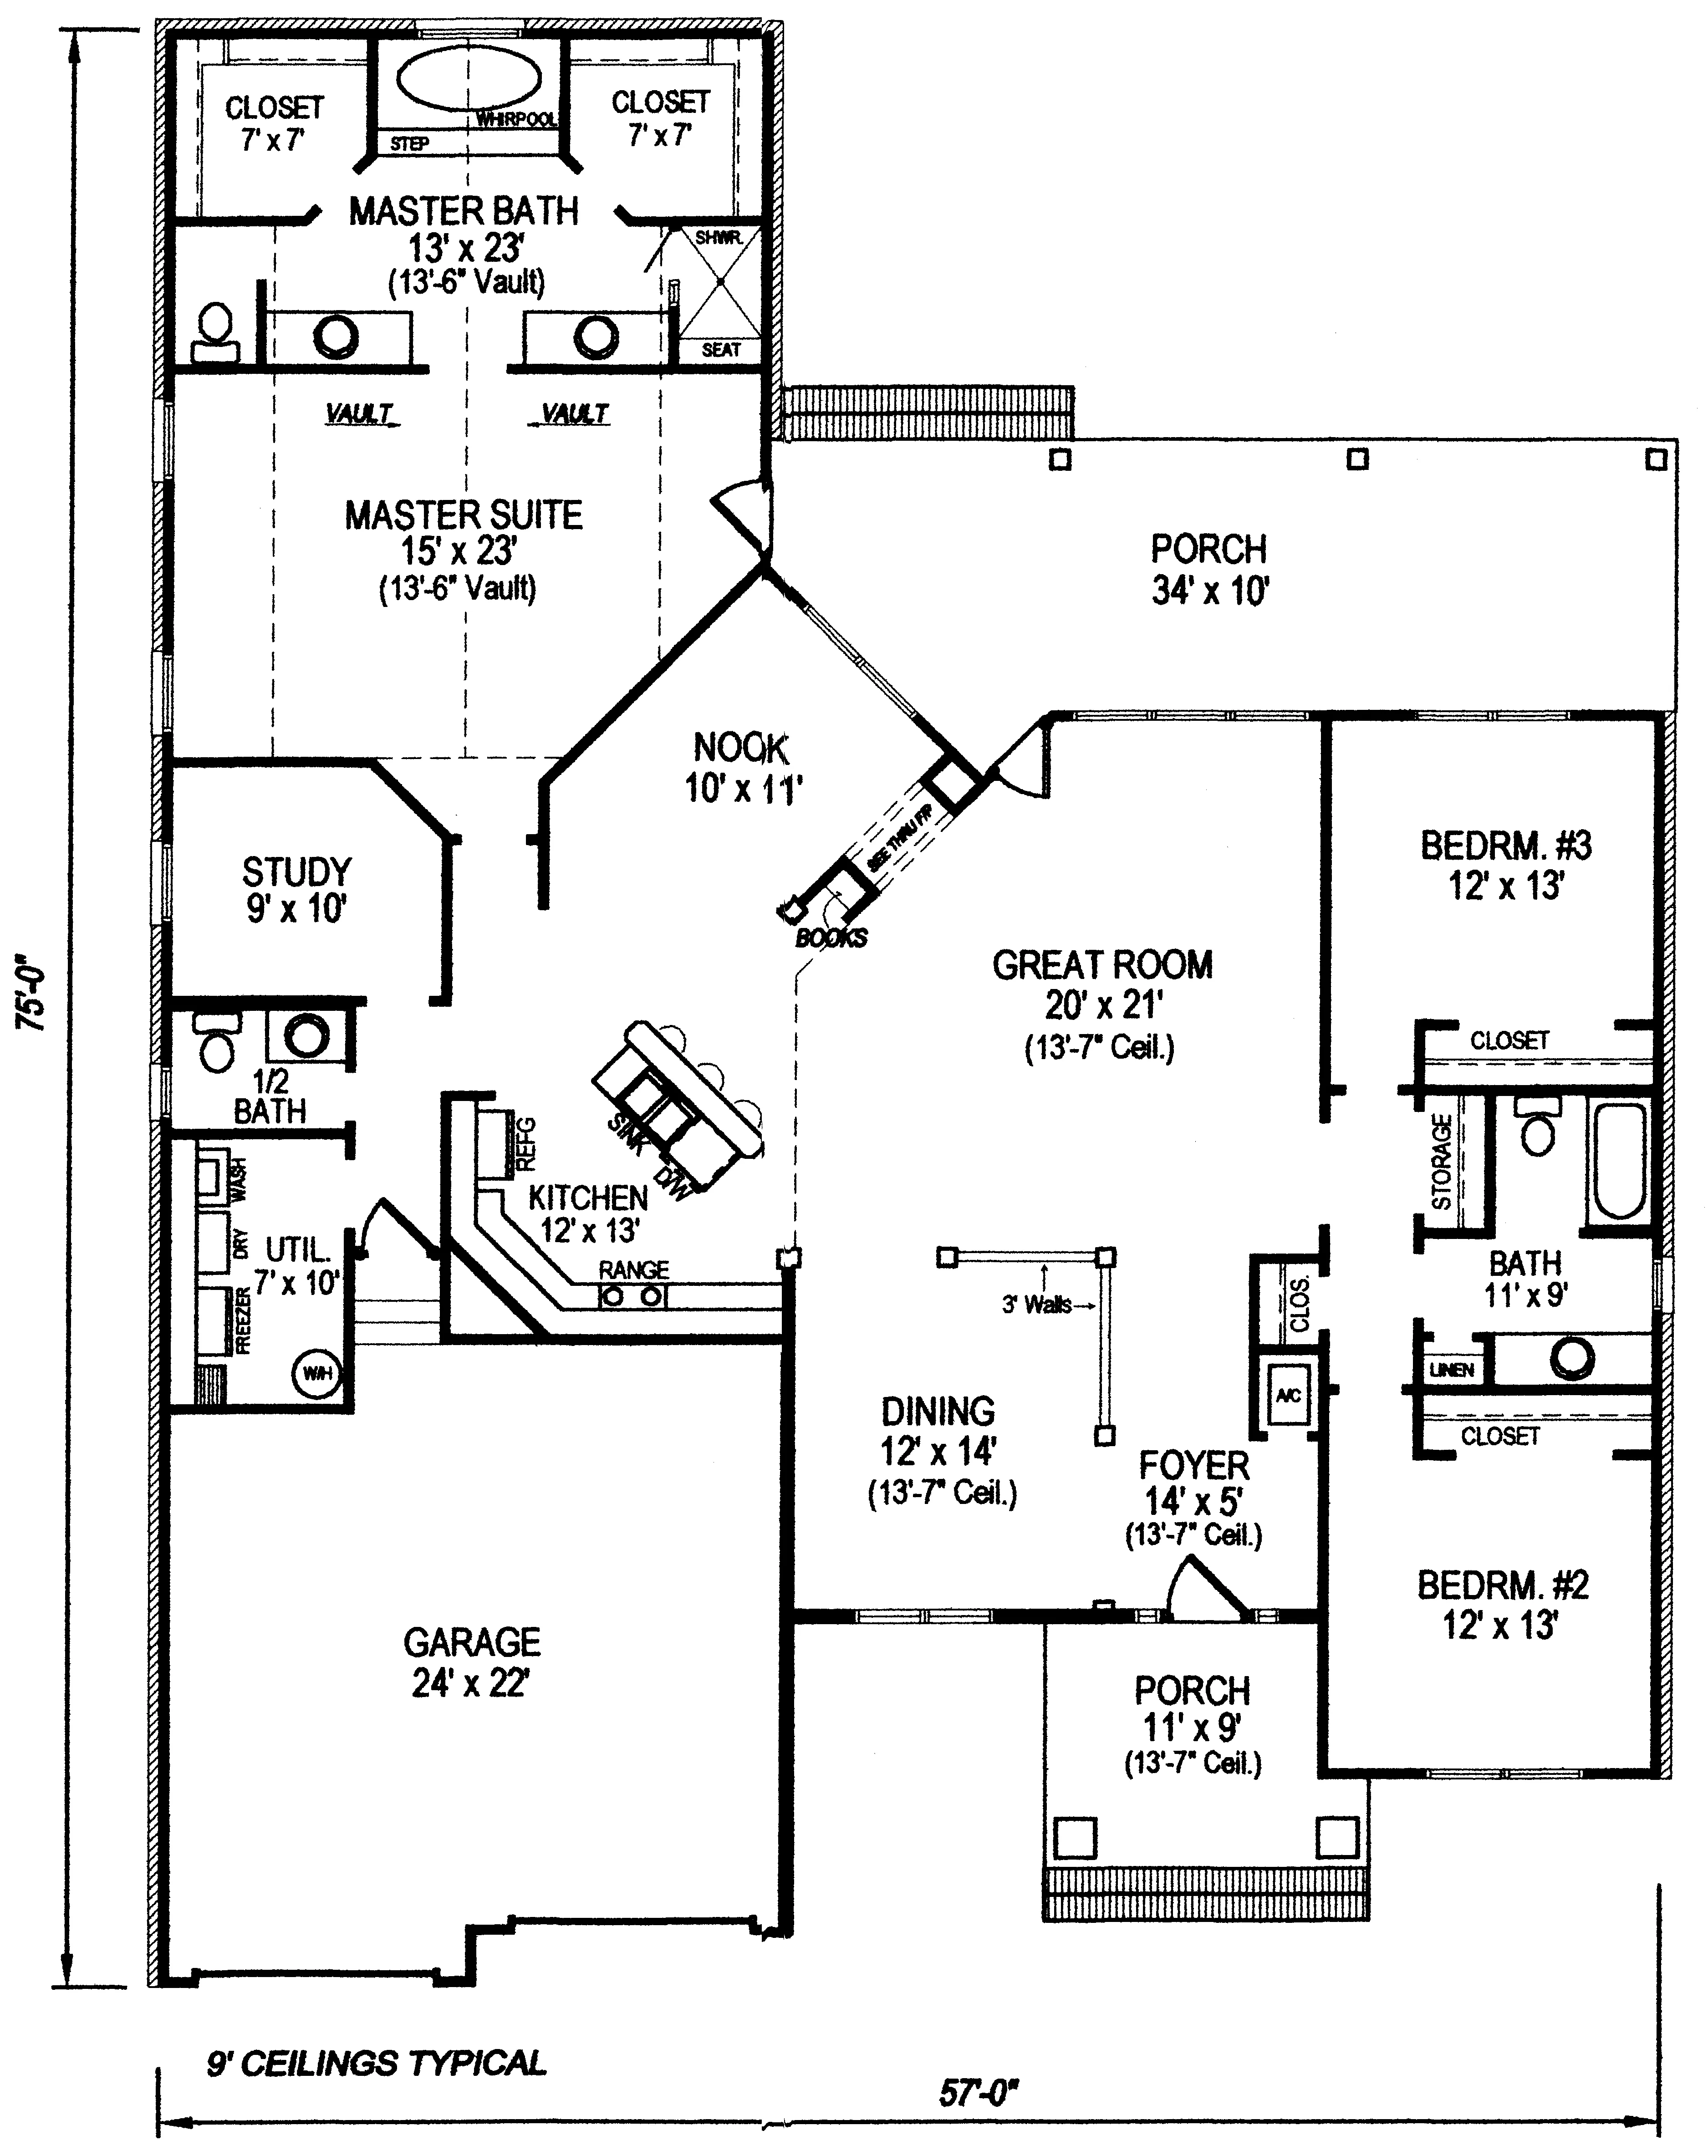 Ranch House Plan First Floor - Santa Bella Sunbelt Home 069D-0094 - Shop House Plans and More